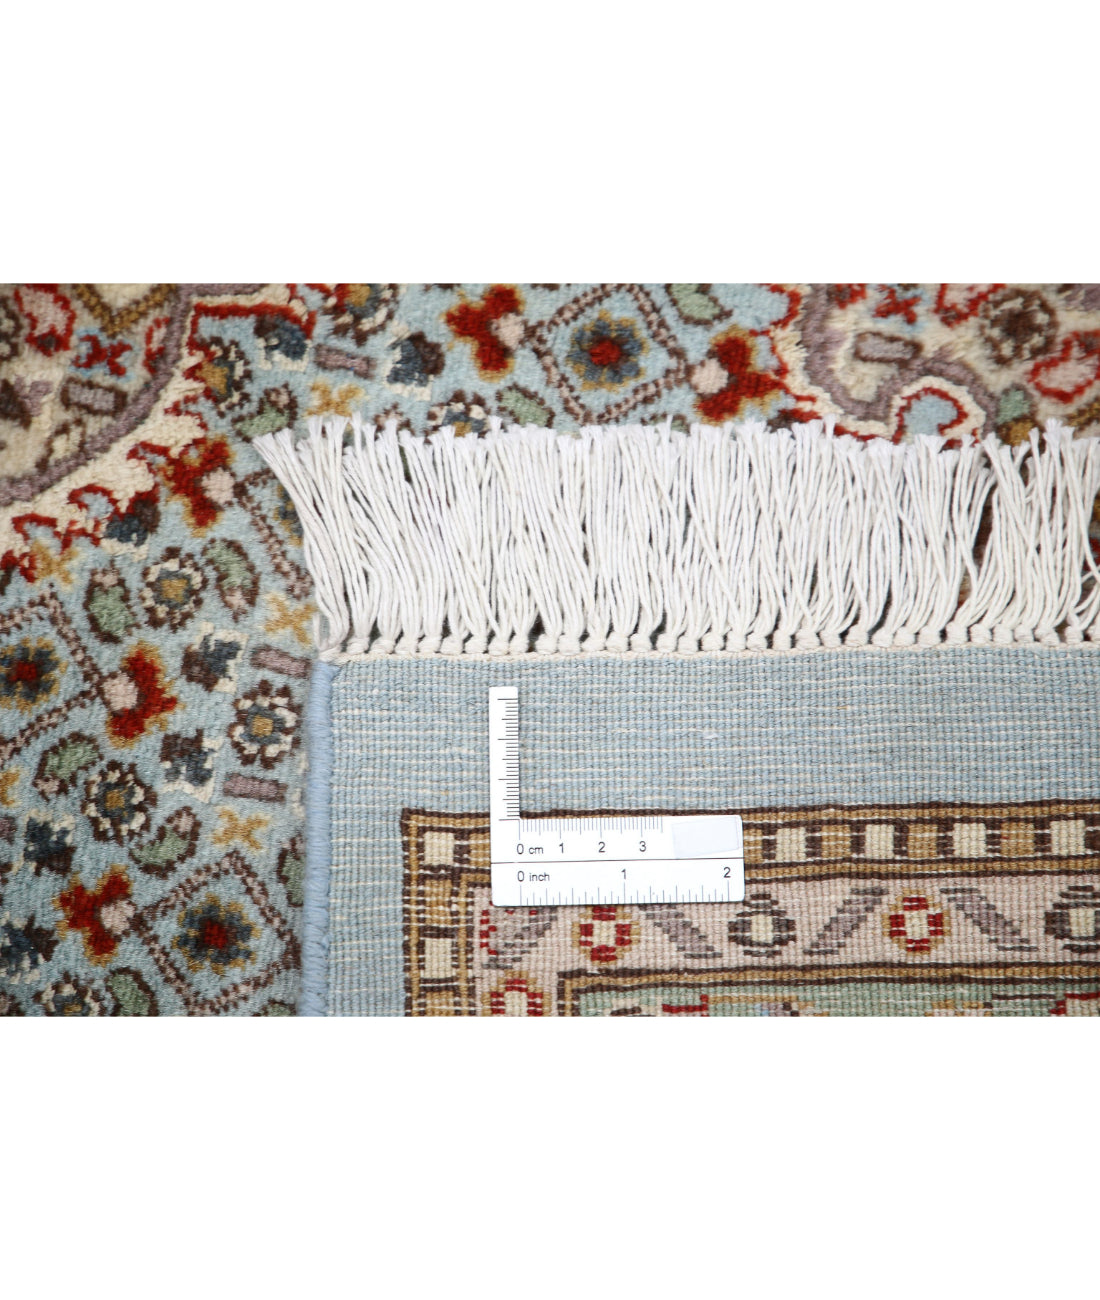 Hand Knotted Heritage Persian Style Tabriz Mahi Wool Rug - 6'1'' x 9'0'' 6'1'' x 9'0'' (183 X 270) / Blue / Ivory